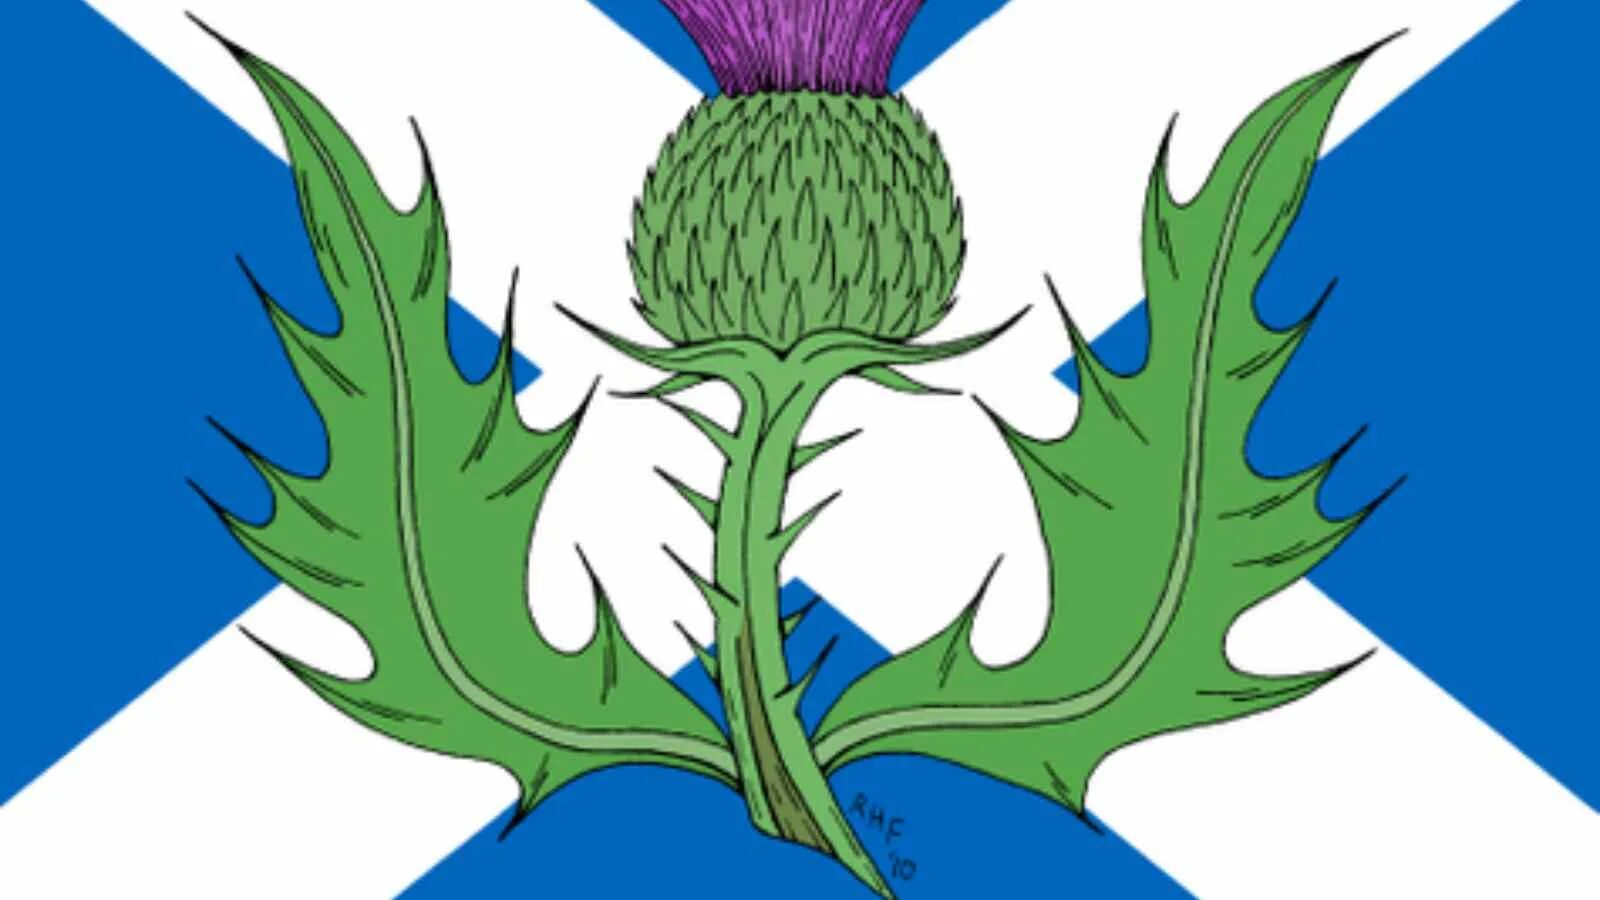 Чертополох символ Шотландии. Цветок чертополоха символ Шотландии. Растение символ Шотландии. Национальный символ Шотландии. Scotland plant symbol